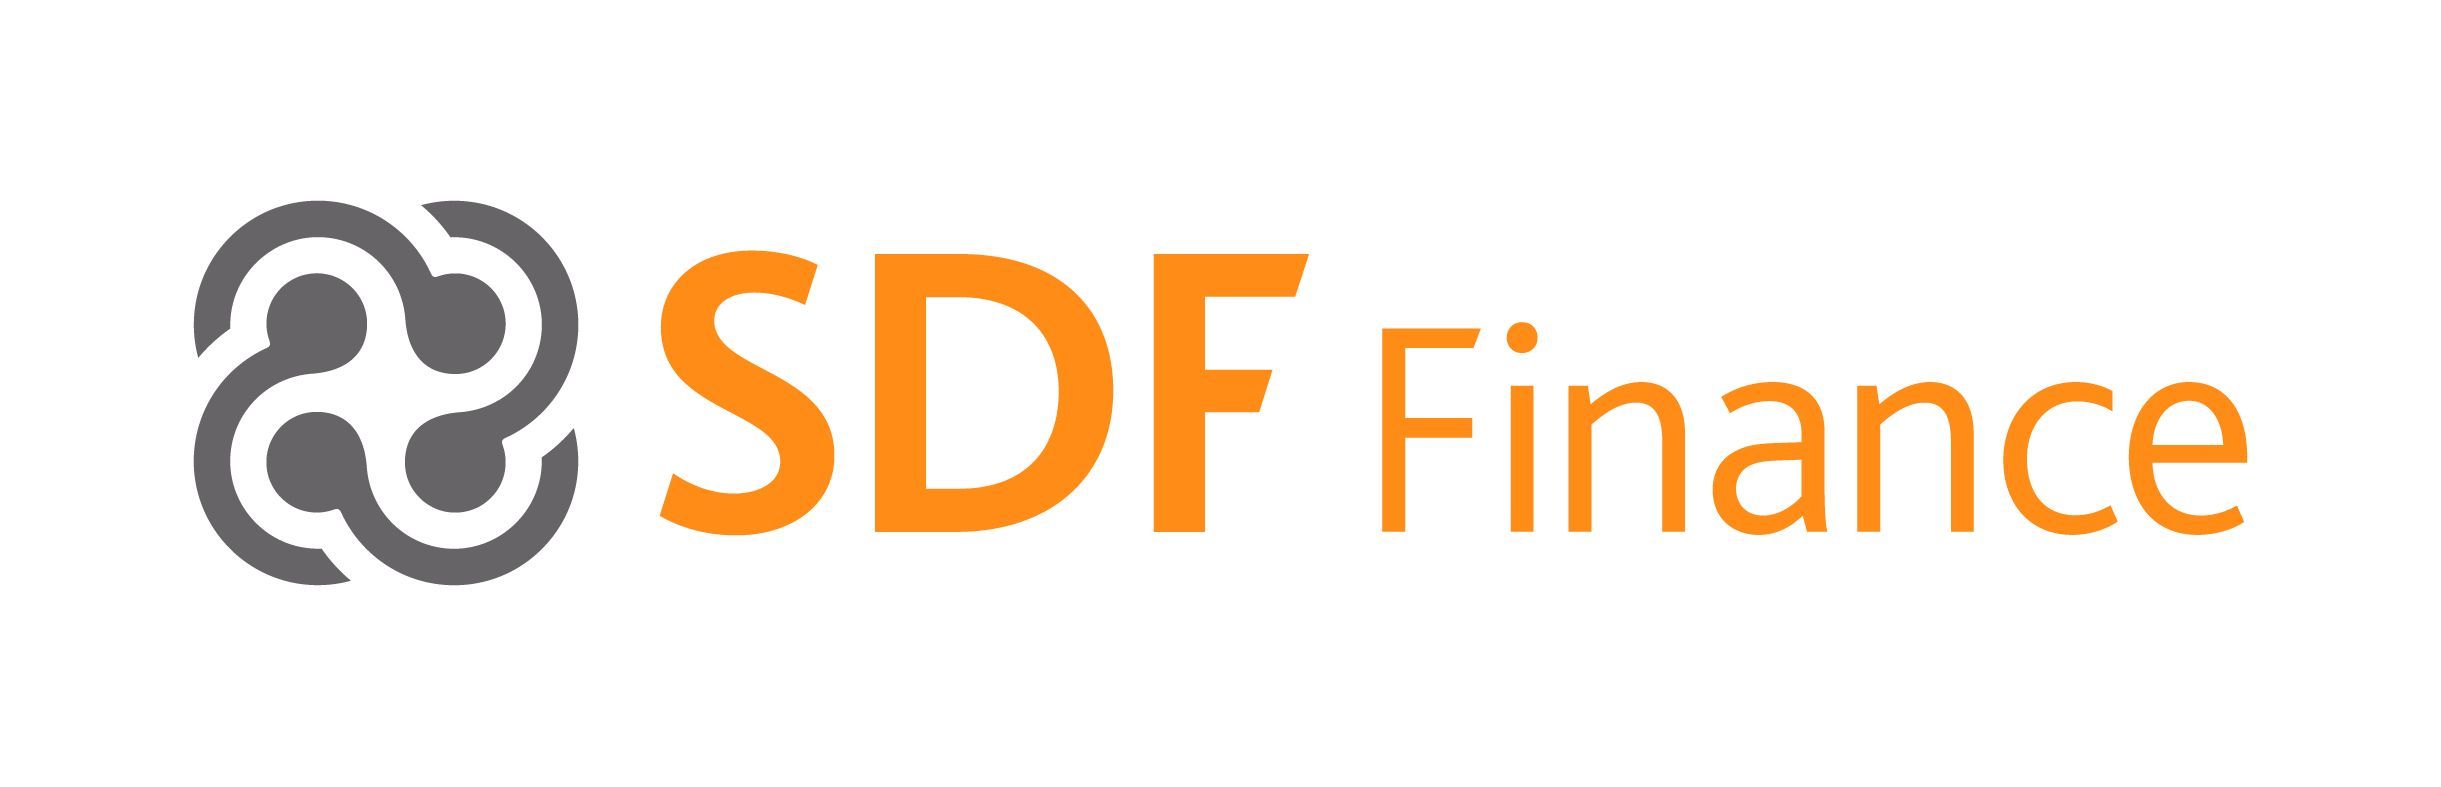 SDF_Finance-01.jpg